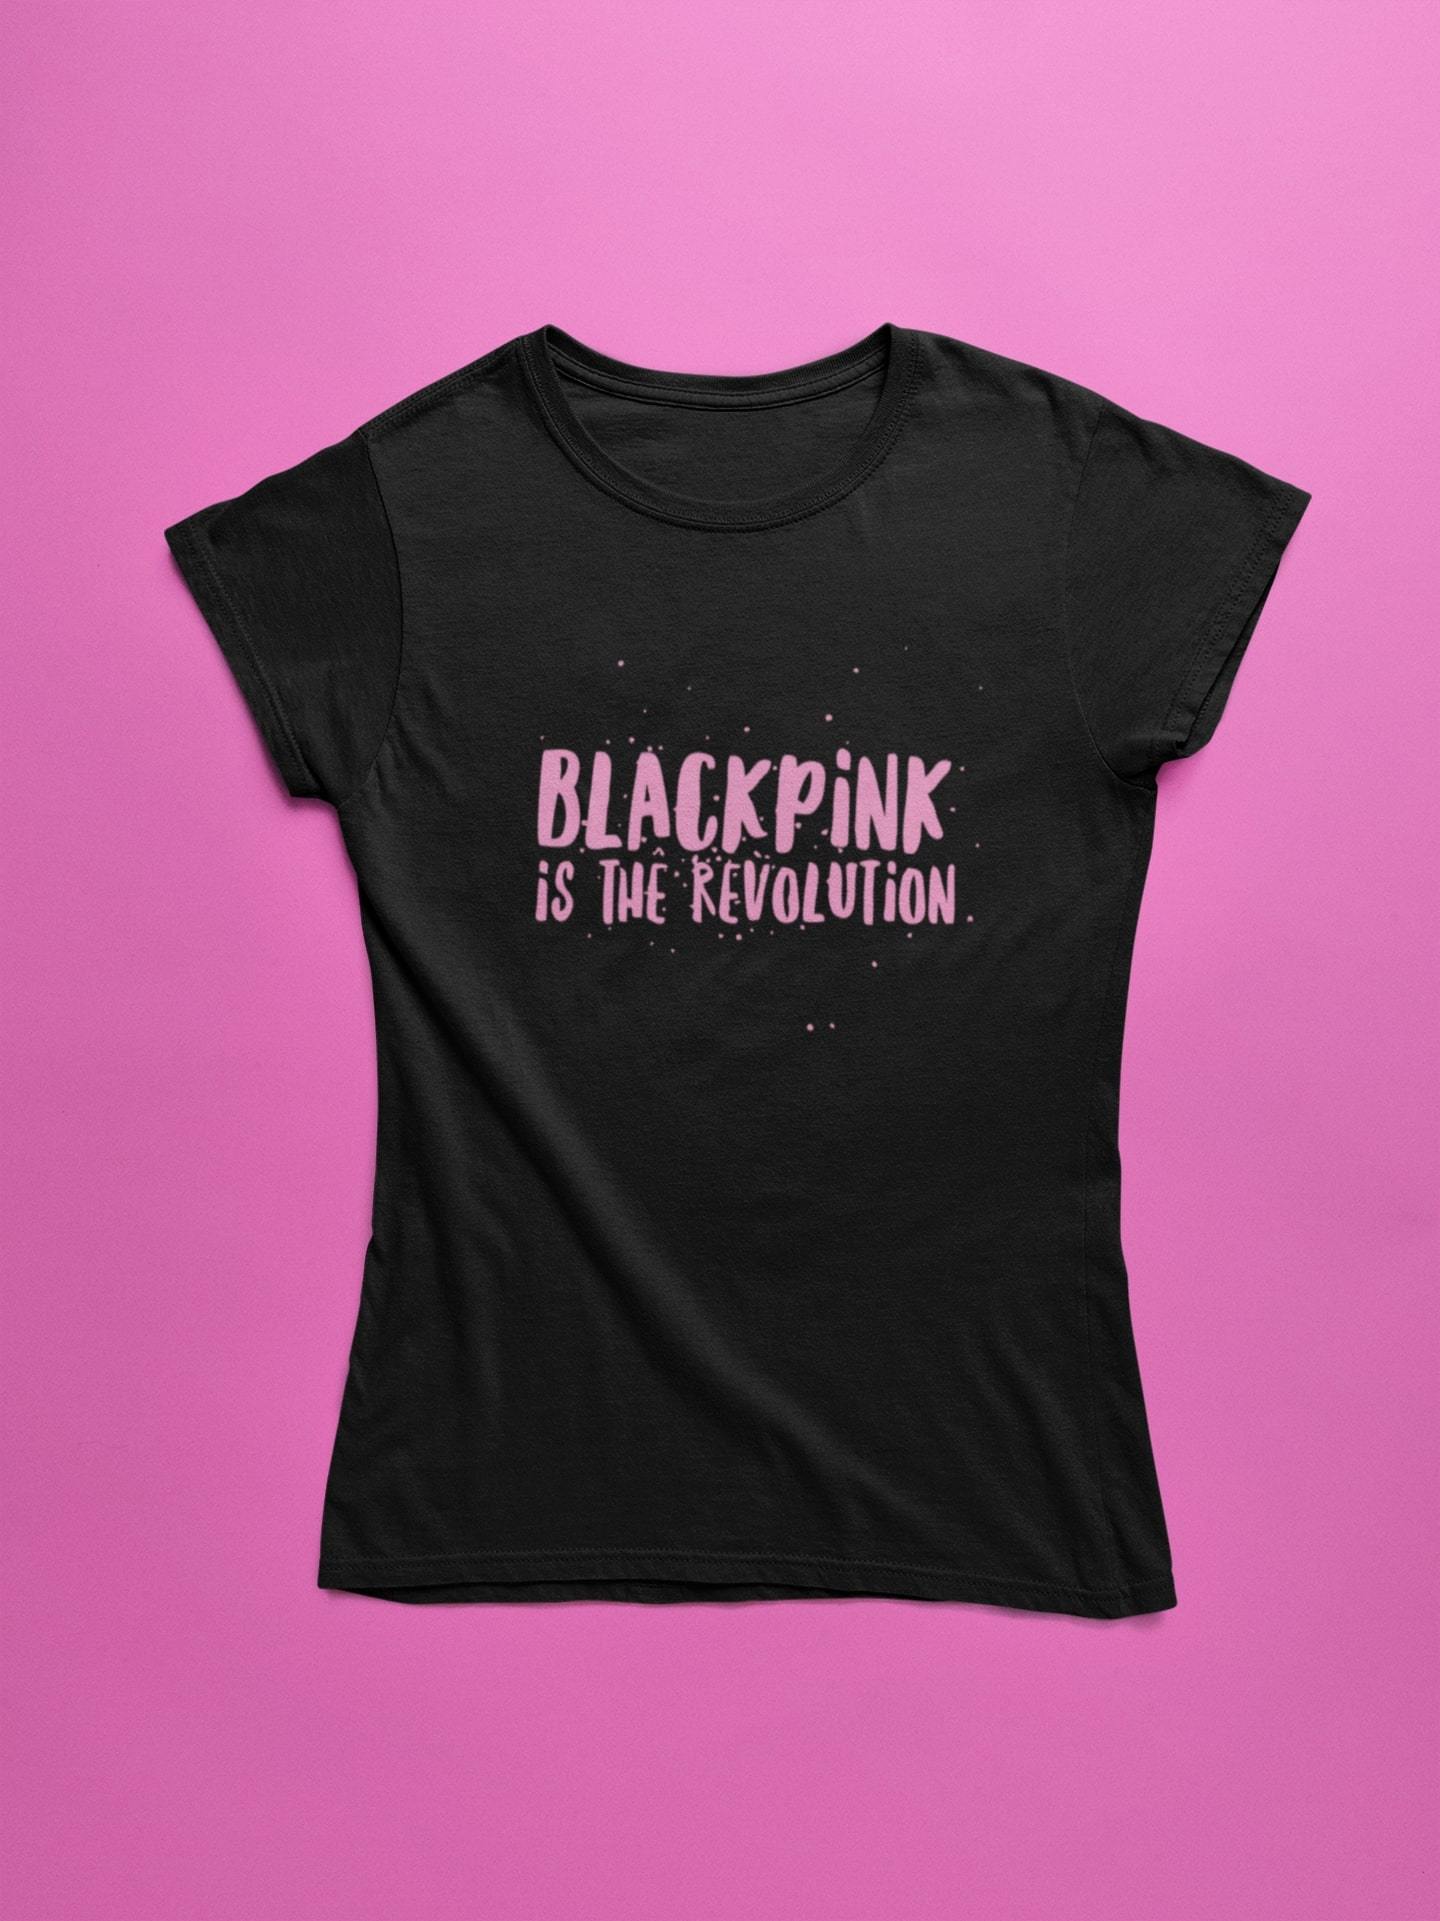 thelegalgang,KPOP BlackPink Revolution T-Shirt for Women,WOMEN.